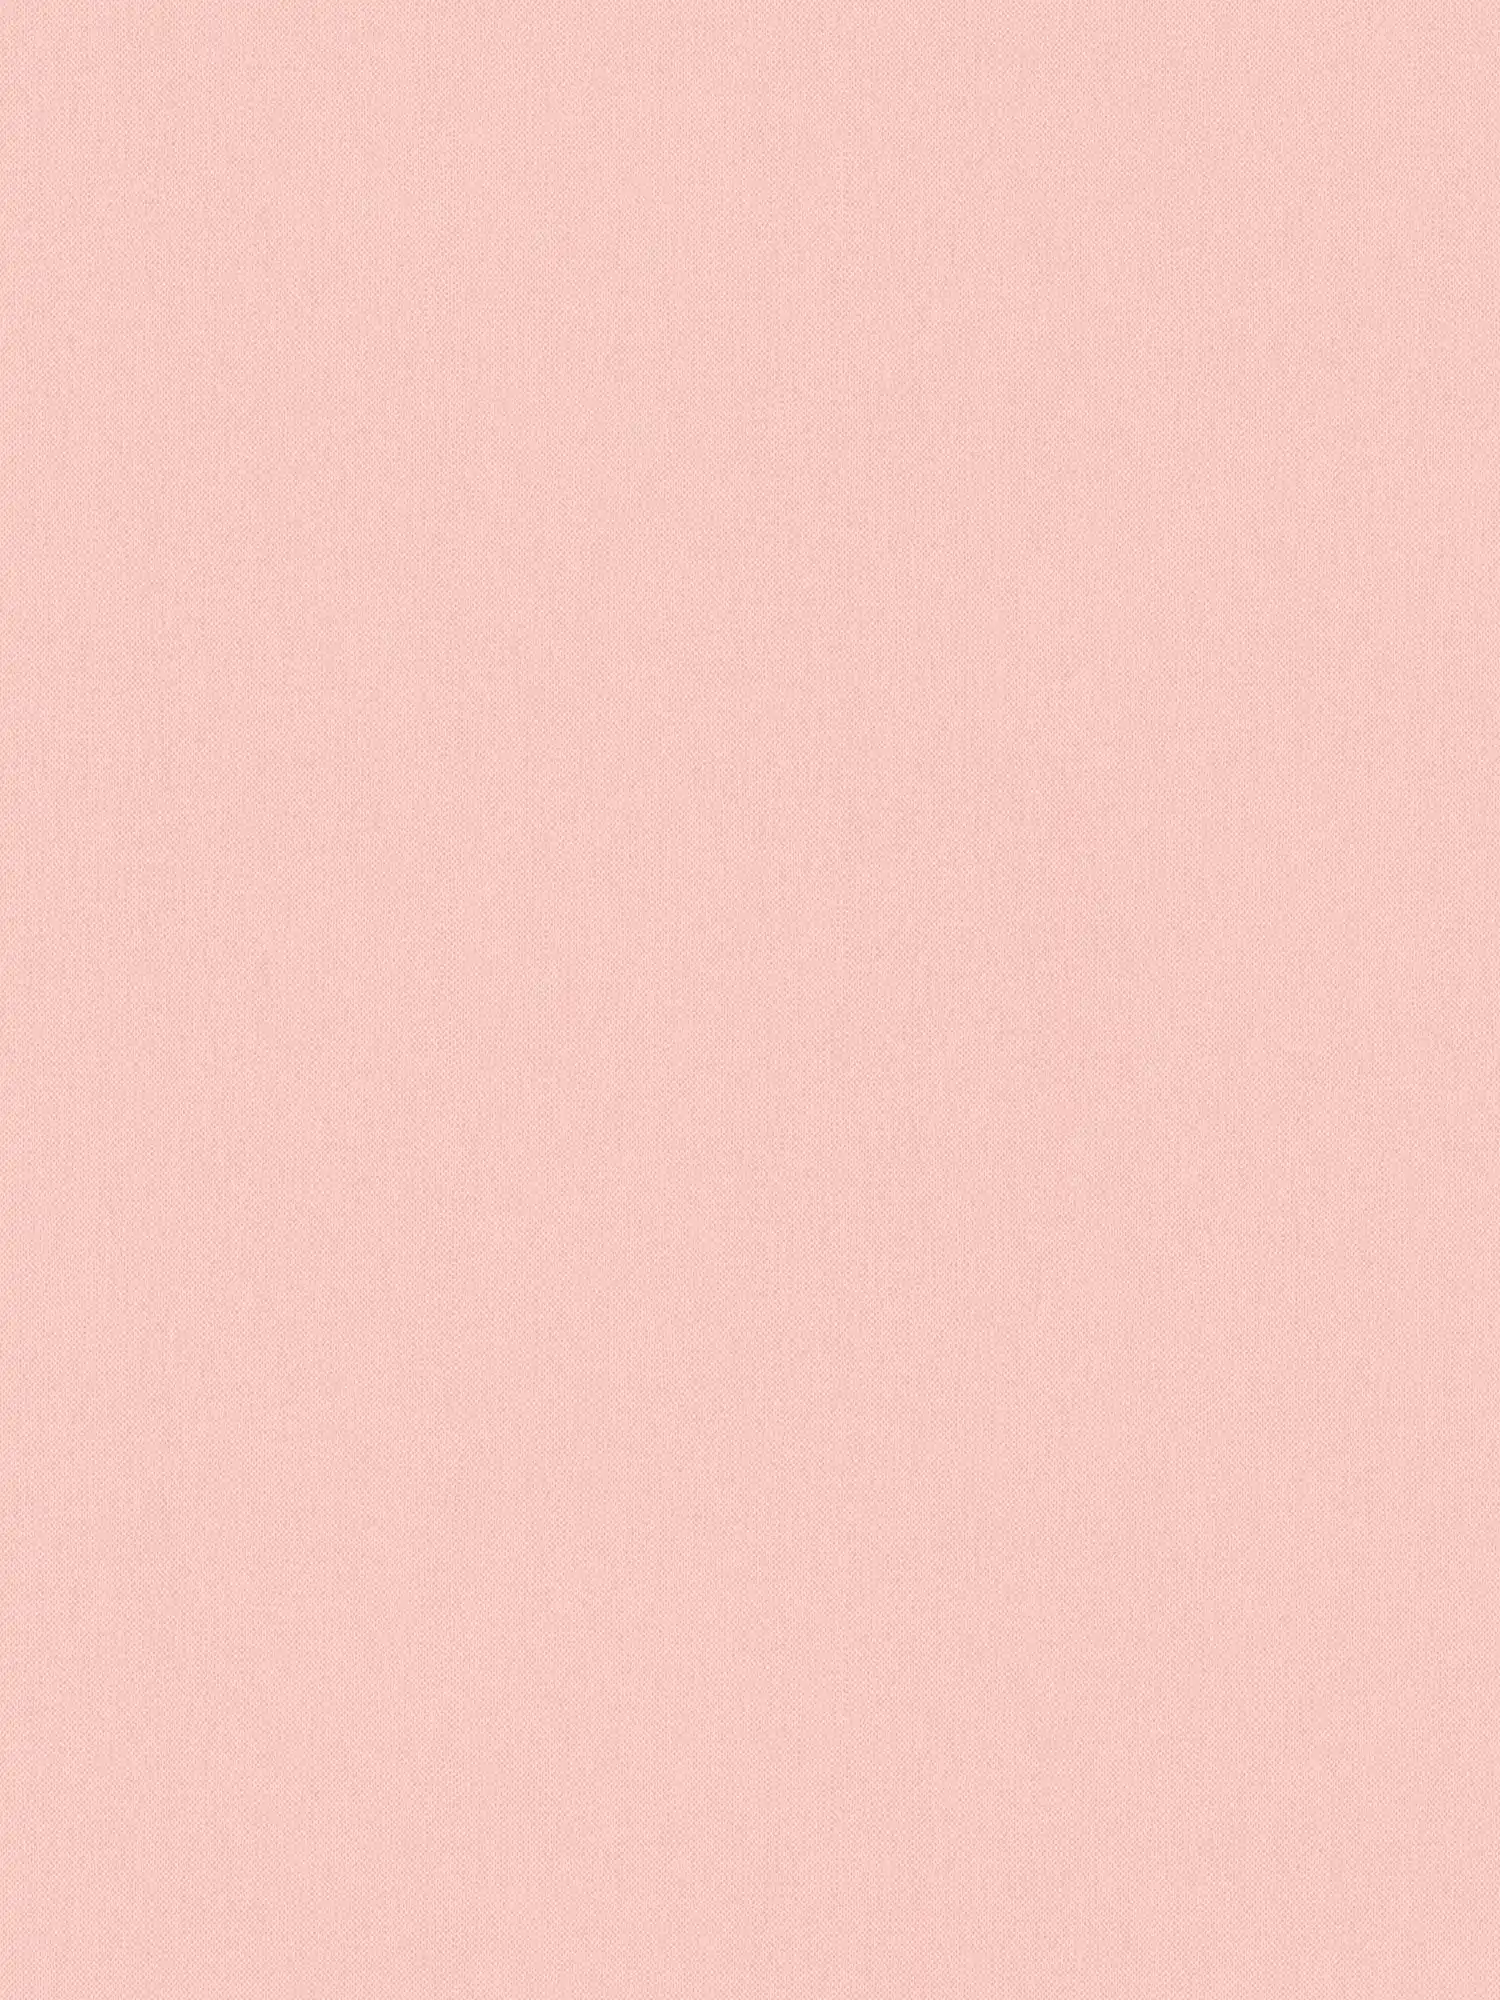 Tapete Pastell Rosa mit Leinenstruktur & Textiloptik – Rosa
